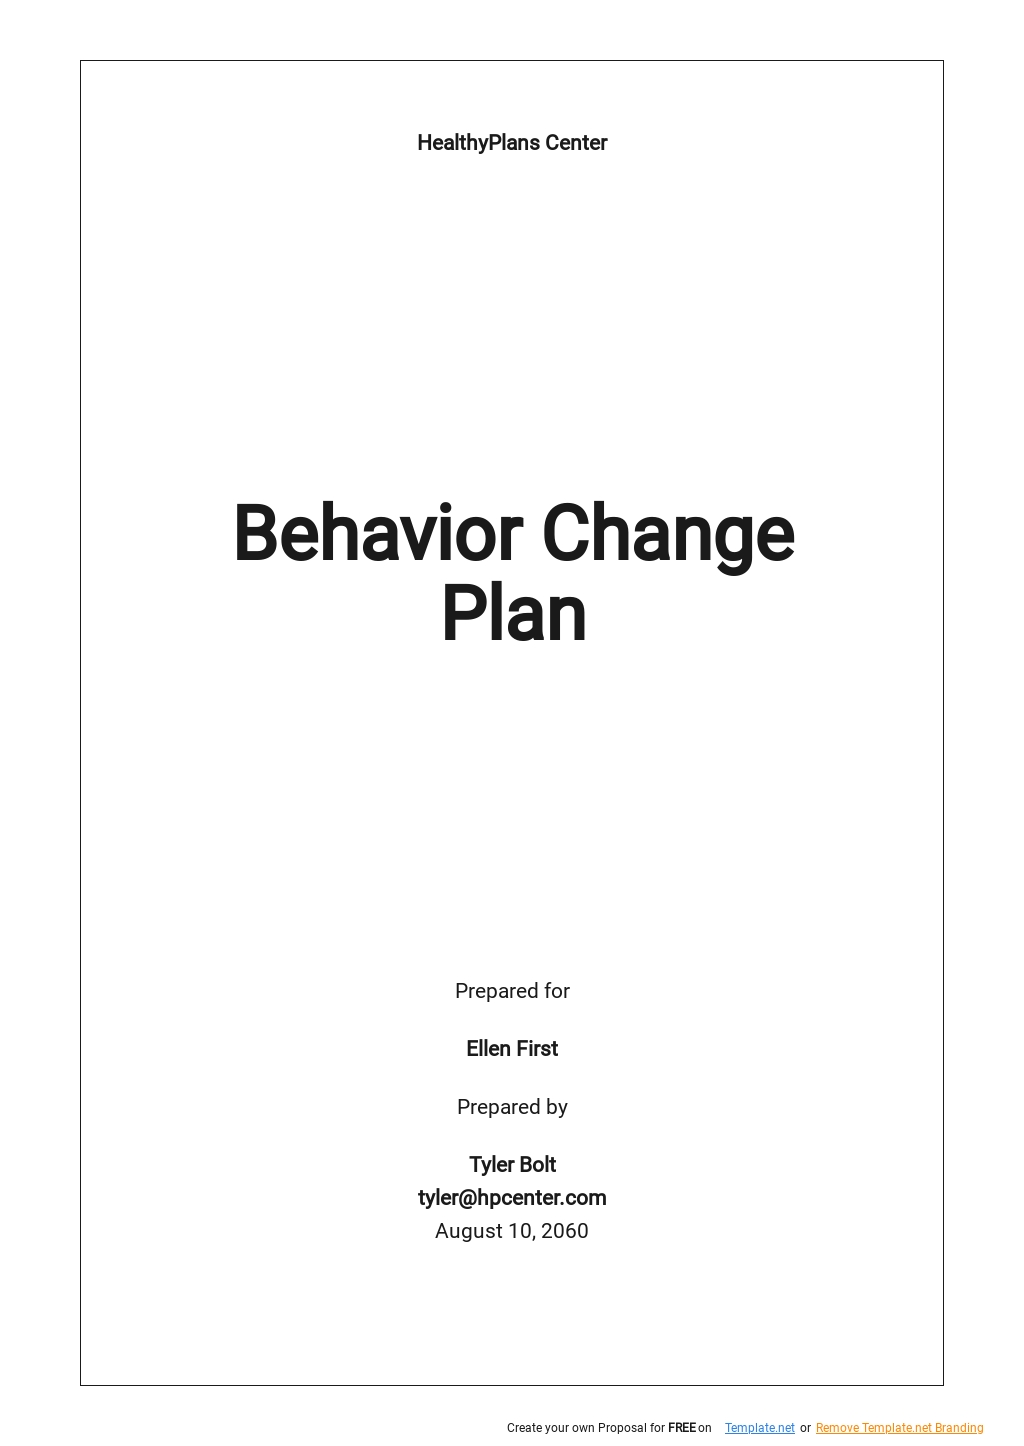 Sample Behavior Change Plan Template .jpe